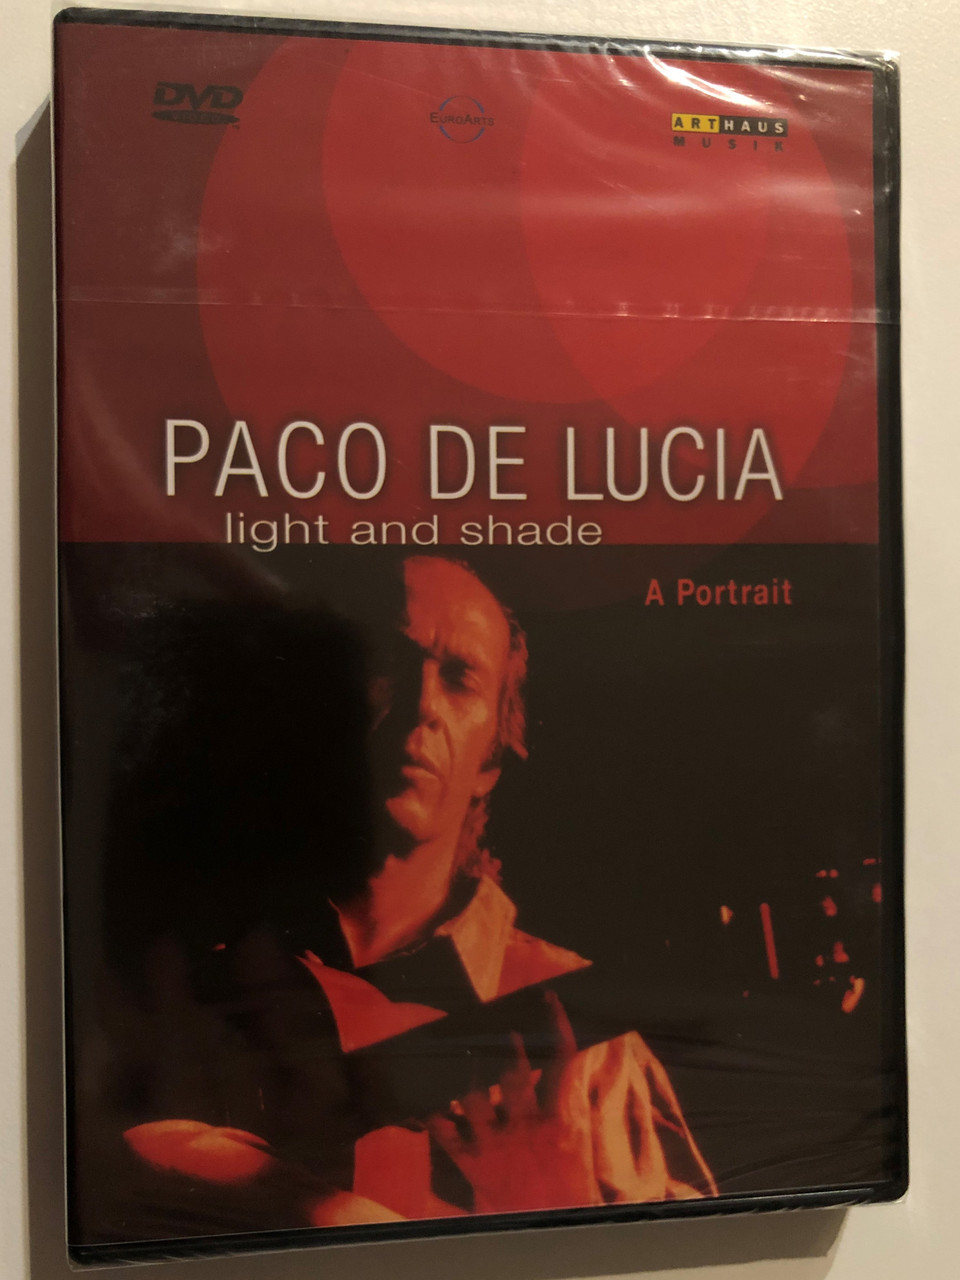 Paco De Lucia - Light And Shade - A Portrait / ArtHaus Musik / Brilliant  Media / Special Feature: ArtHaus Musik Trailer / 2001 DVD -  bibleinmylanguage